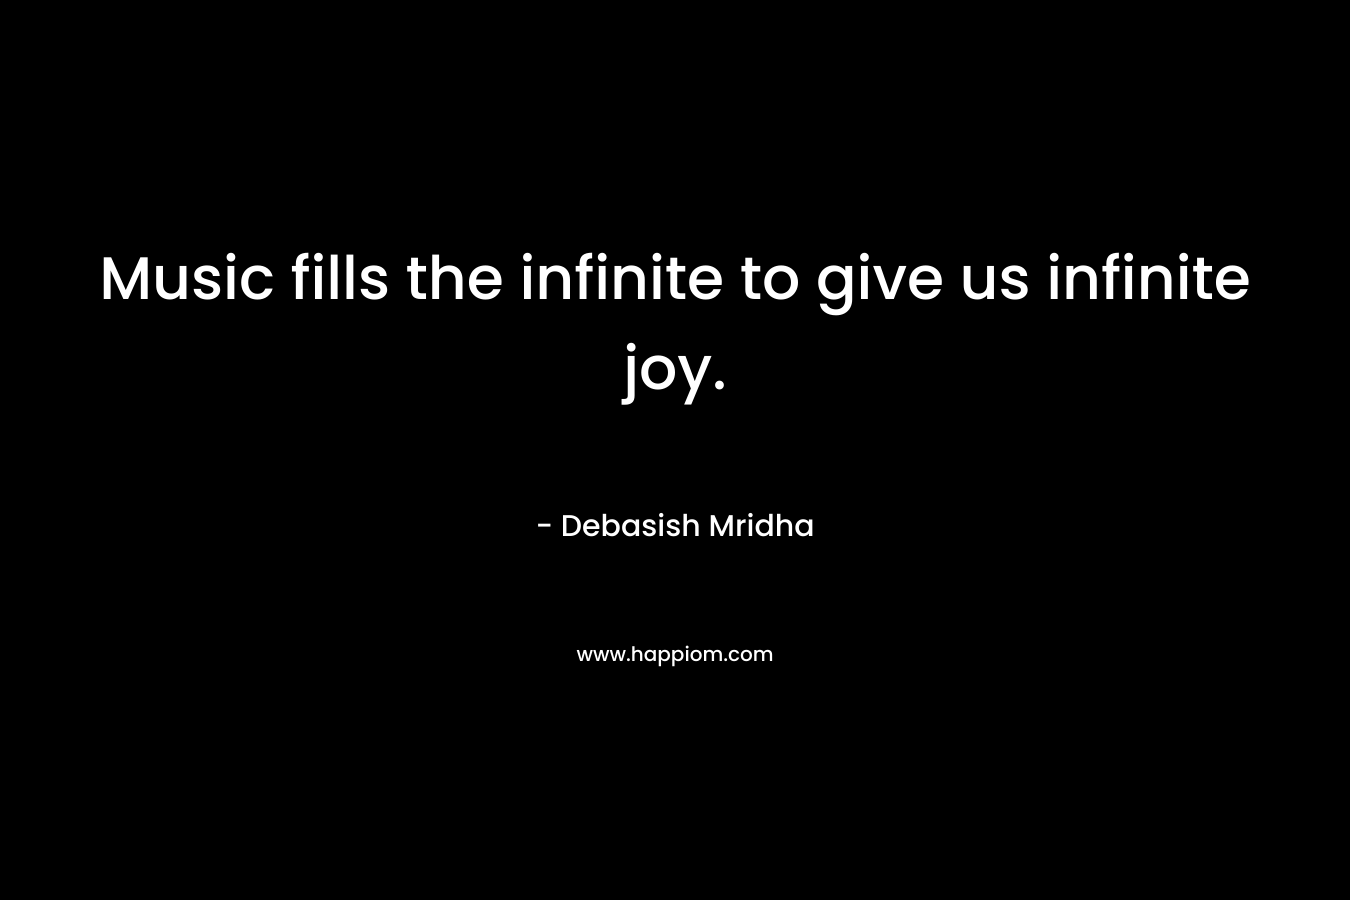 Music fills the infinite to give us infinite joy.